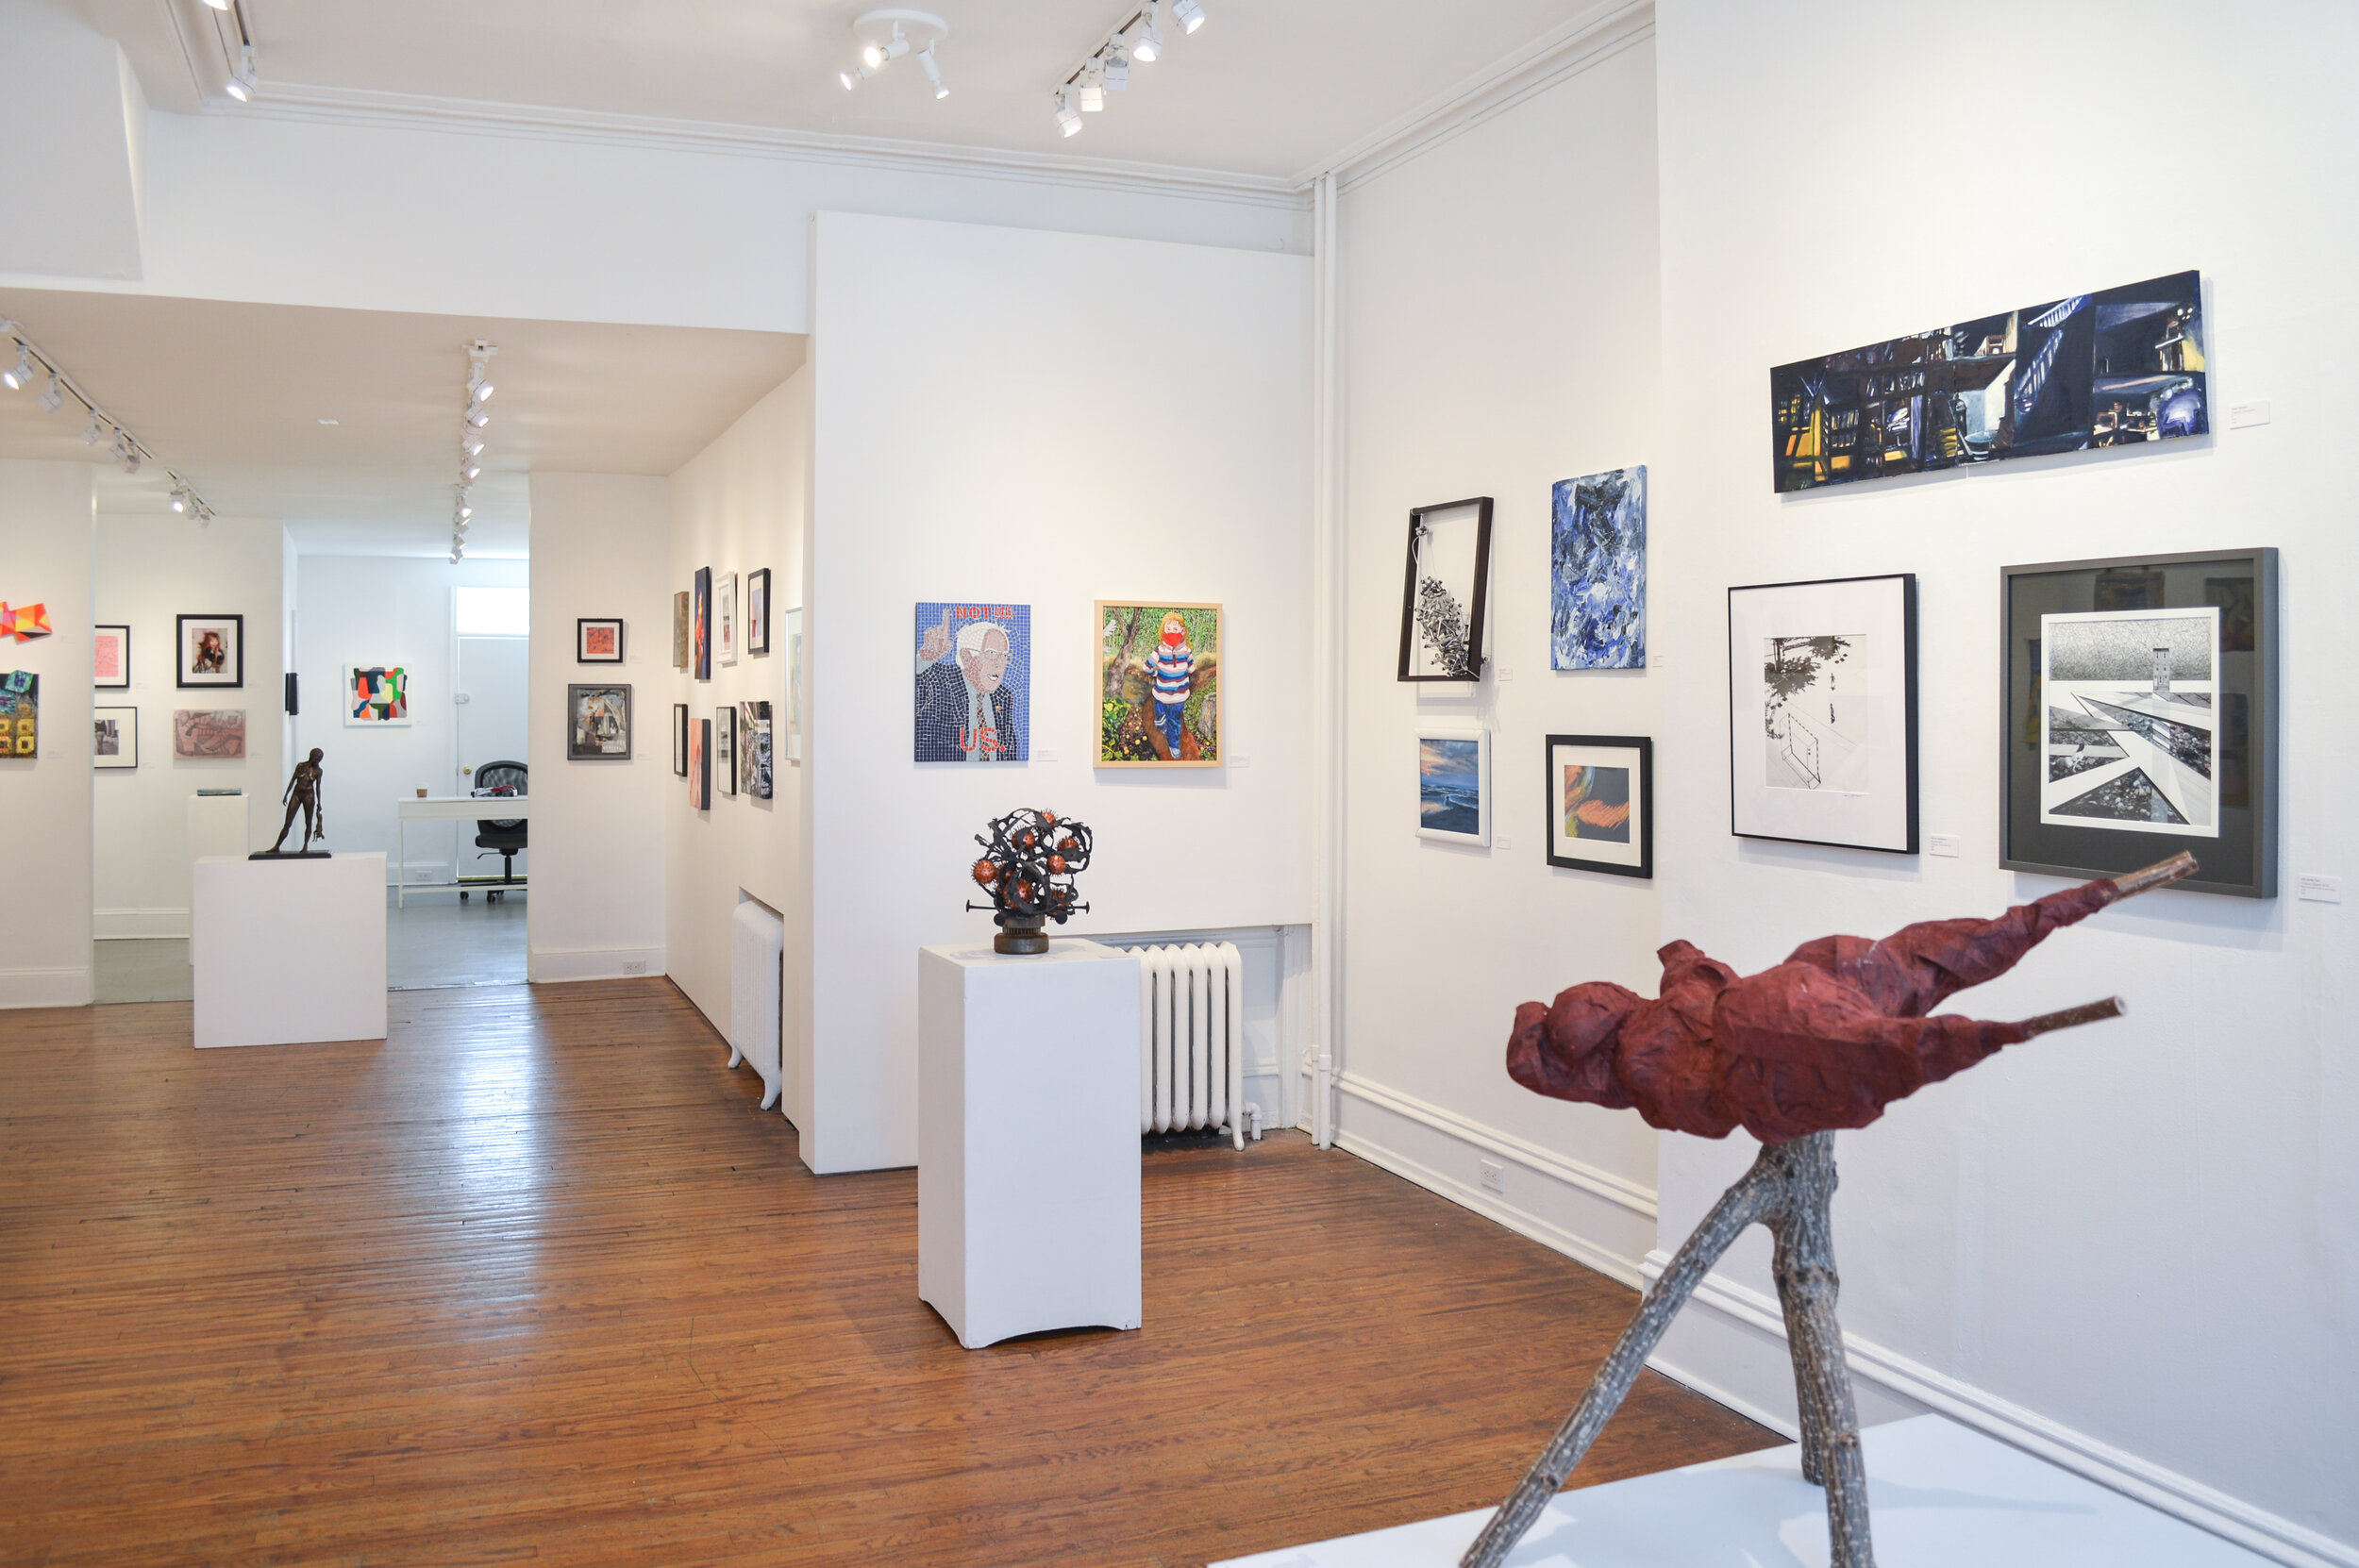  Art gallery in Philadelphia presents a new exhibition in their Bella Vista location.  